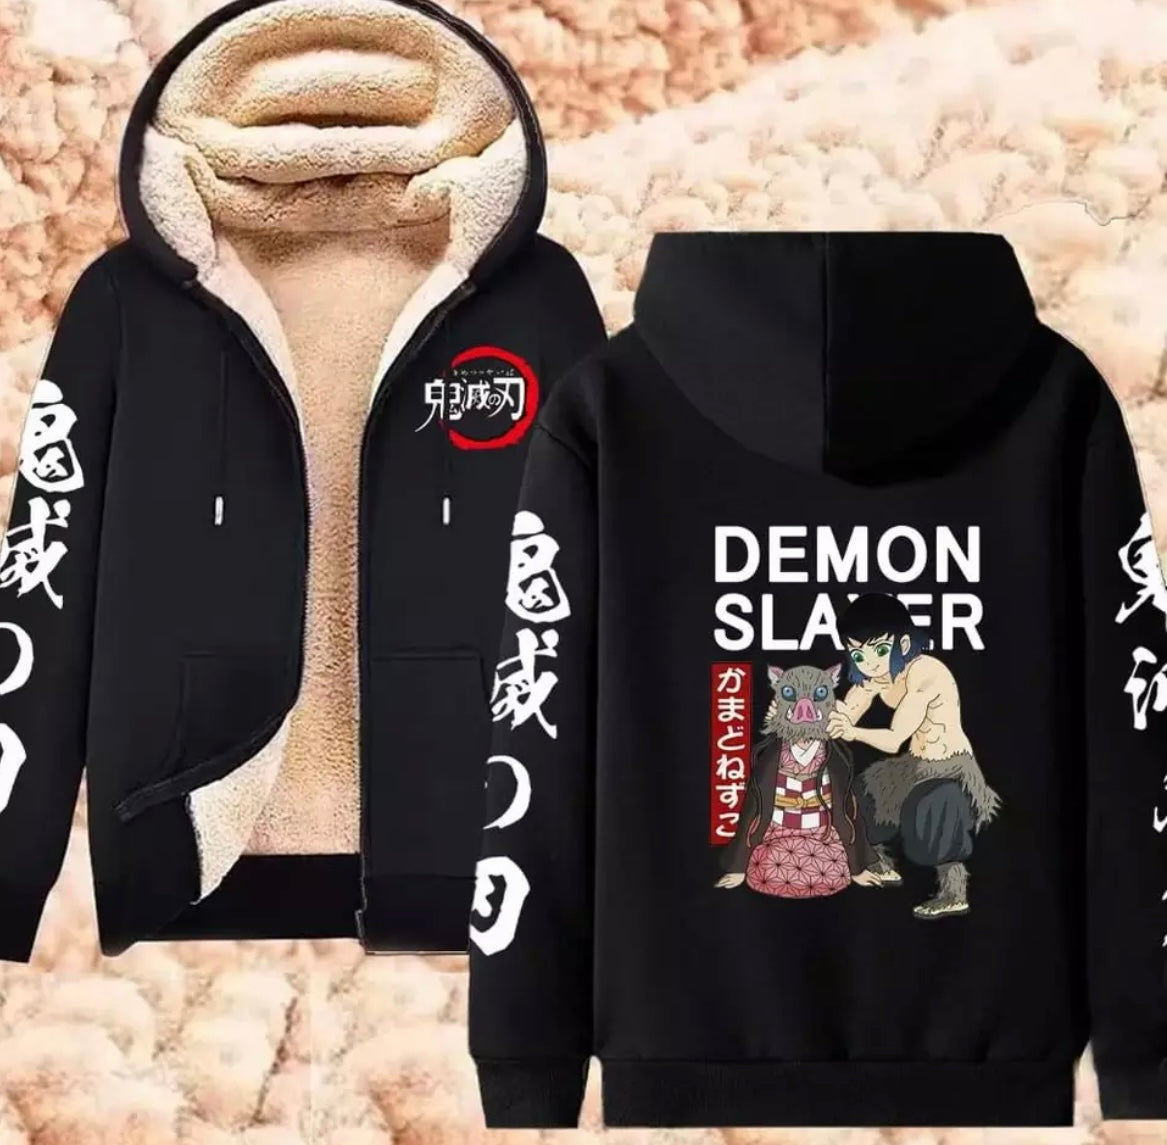 Demons Slayer winter jackets